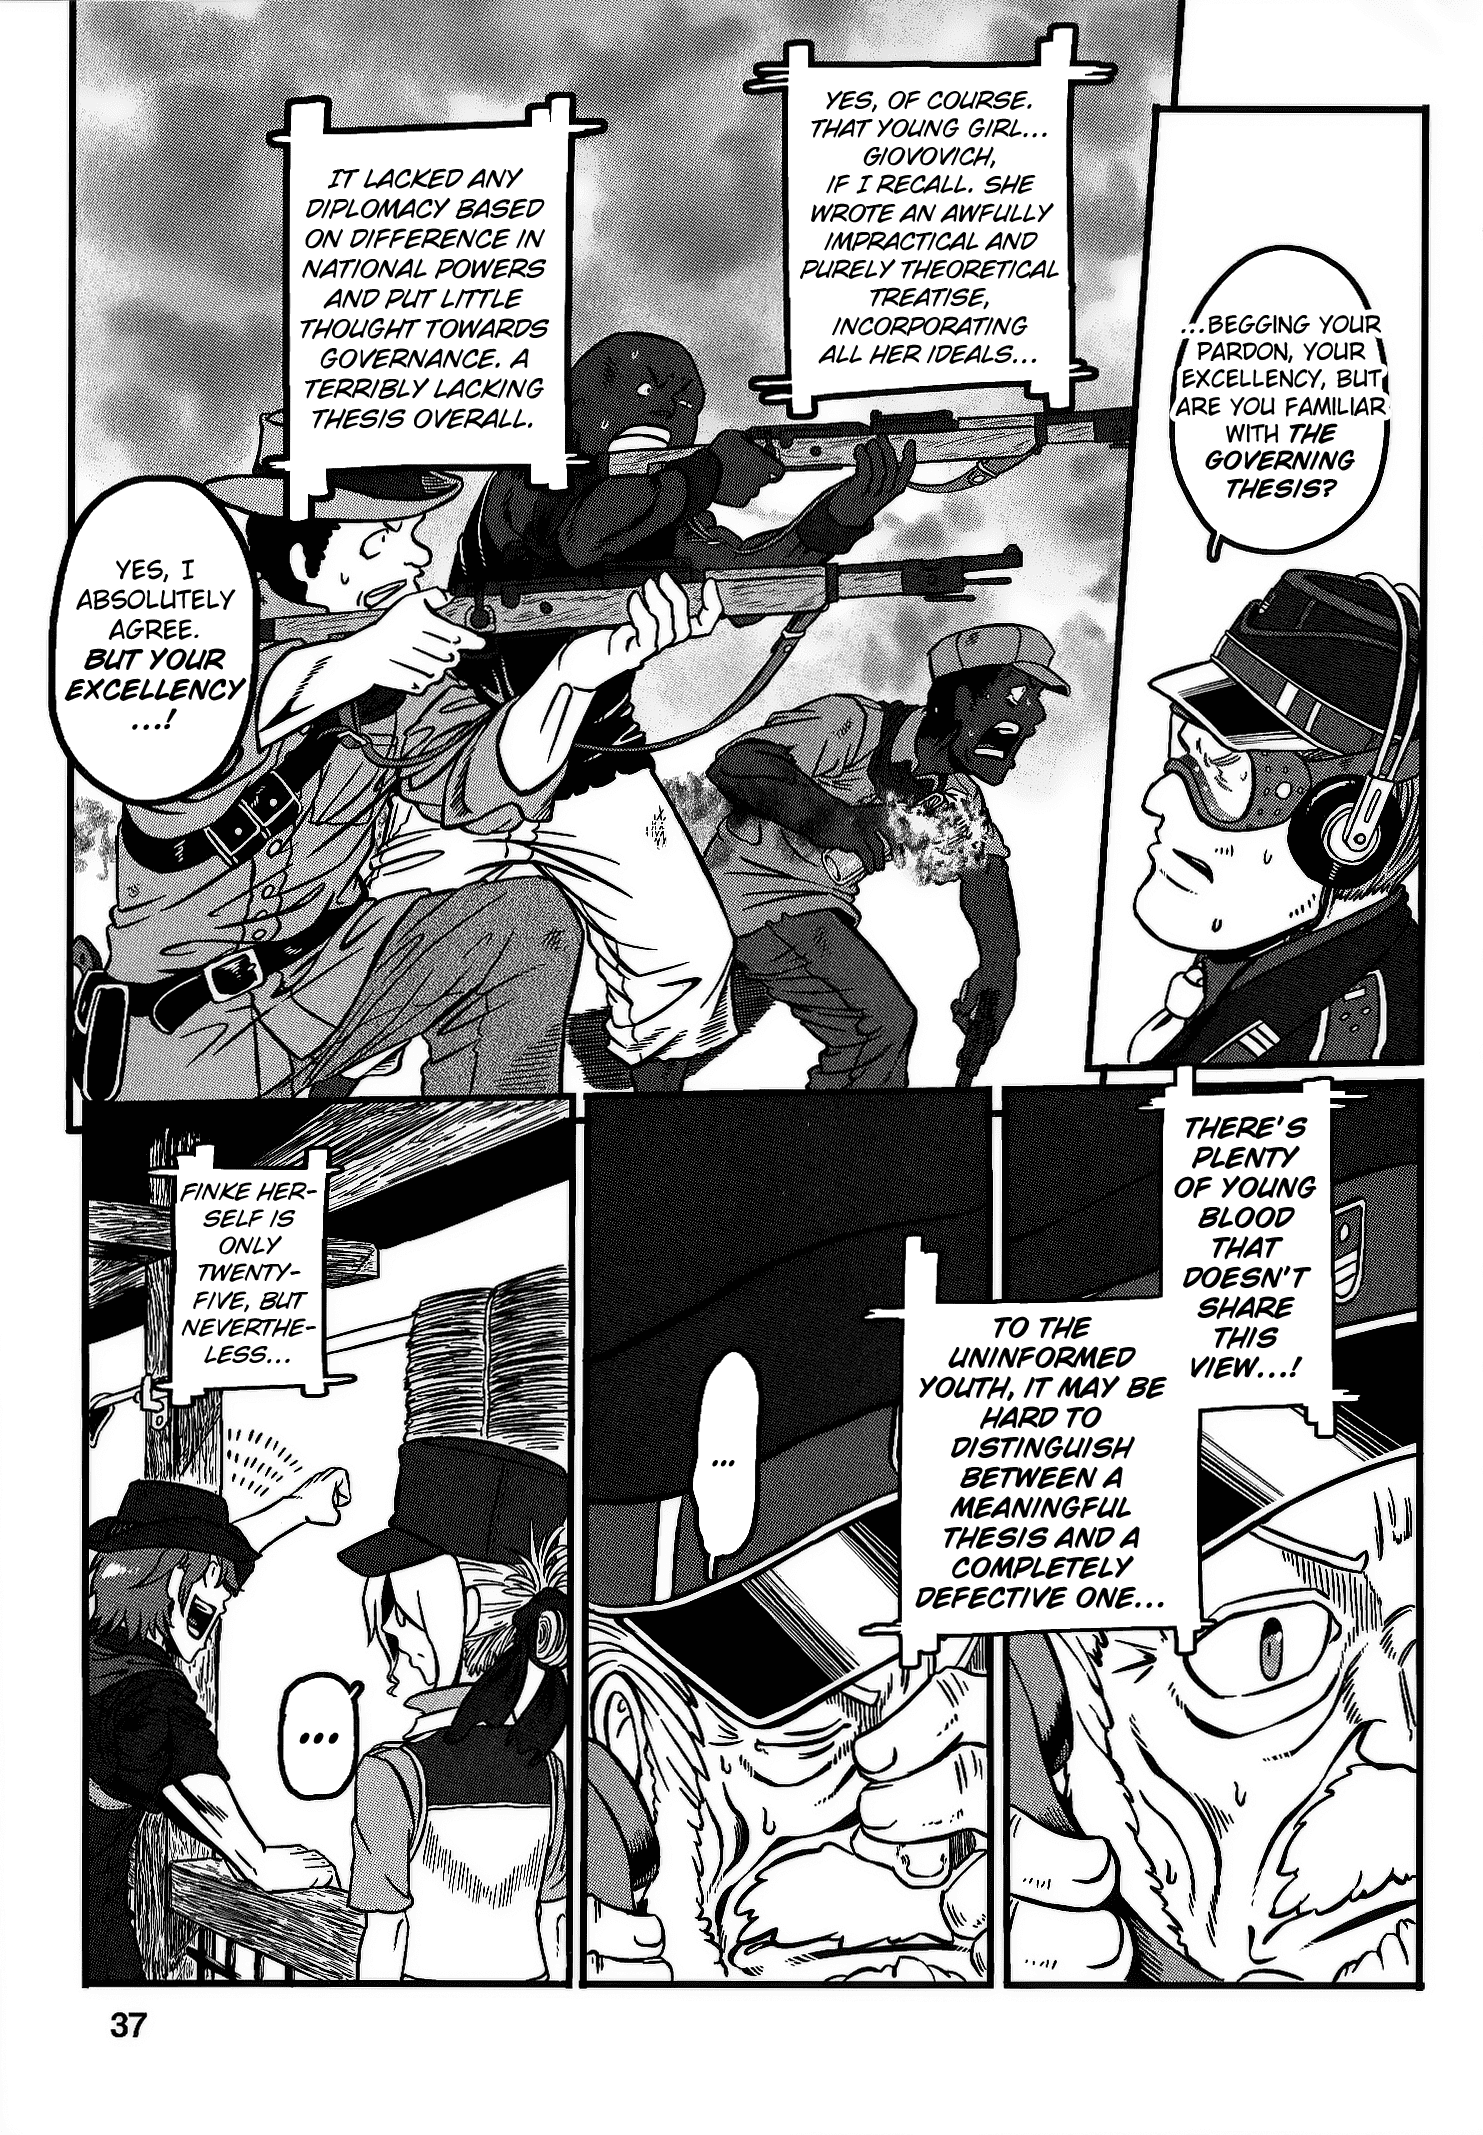 Groundless - Sekigan No Sogekihei - 22 page 41-31484ac4